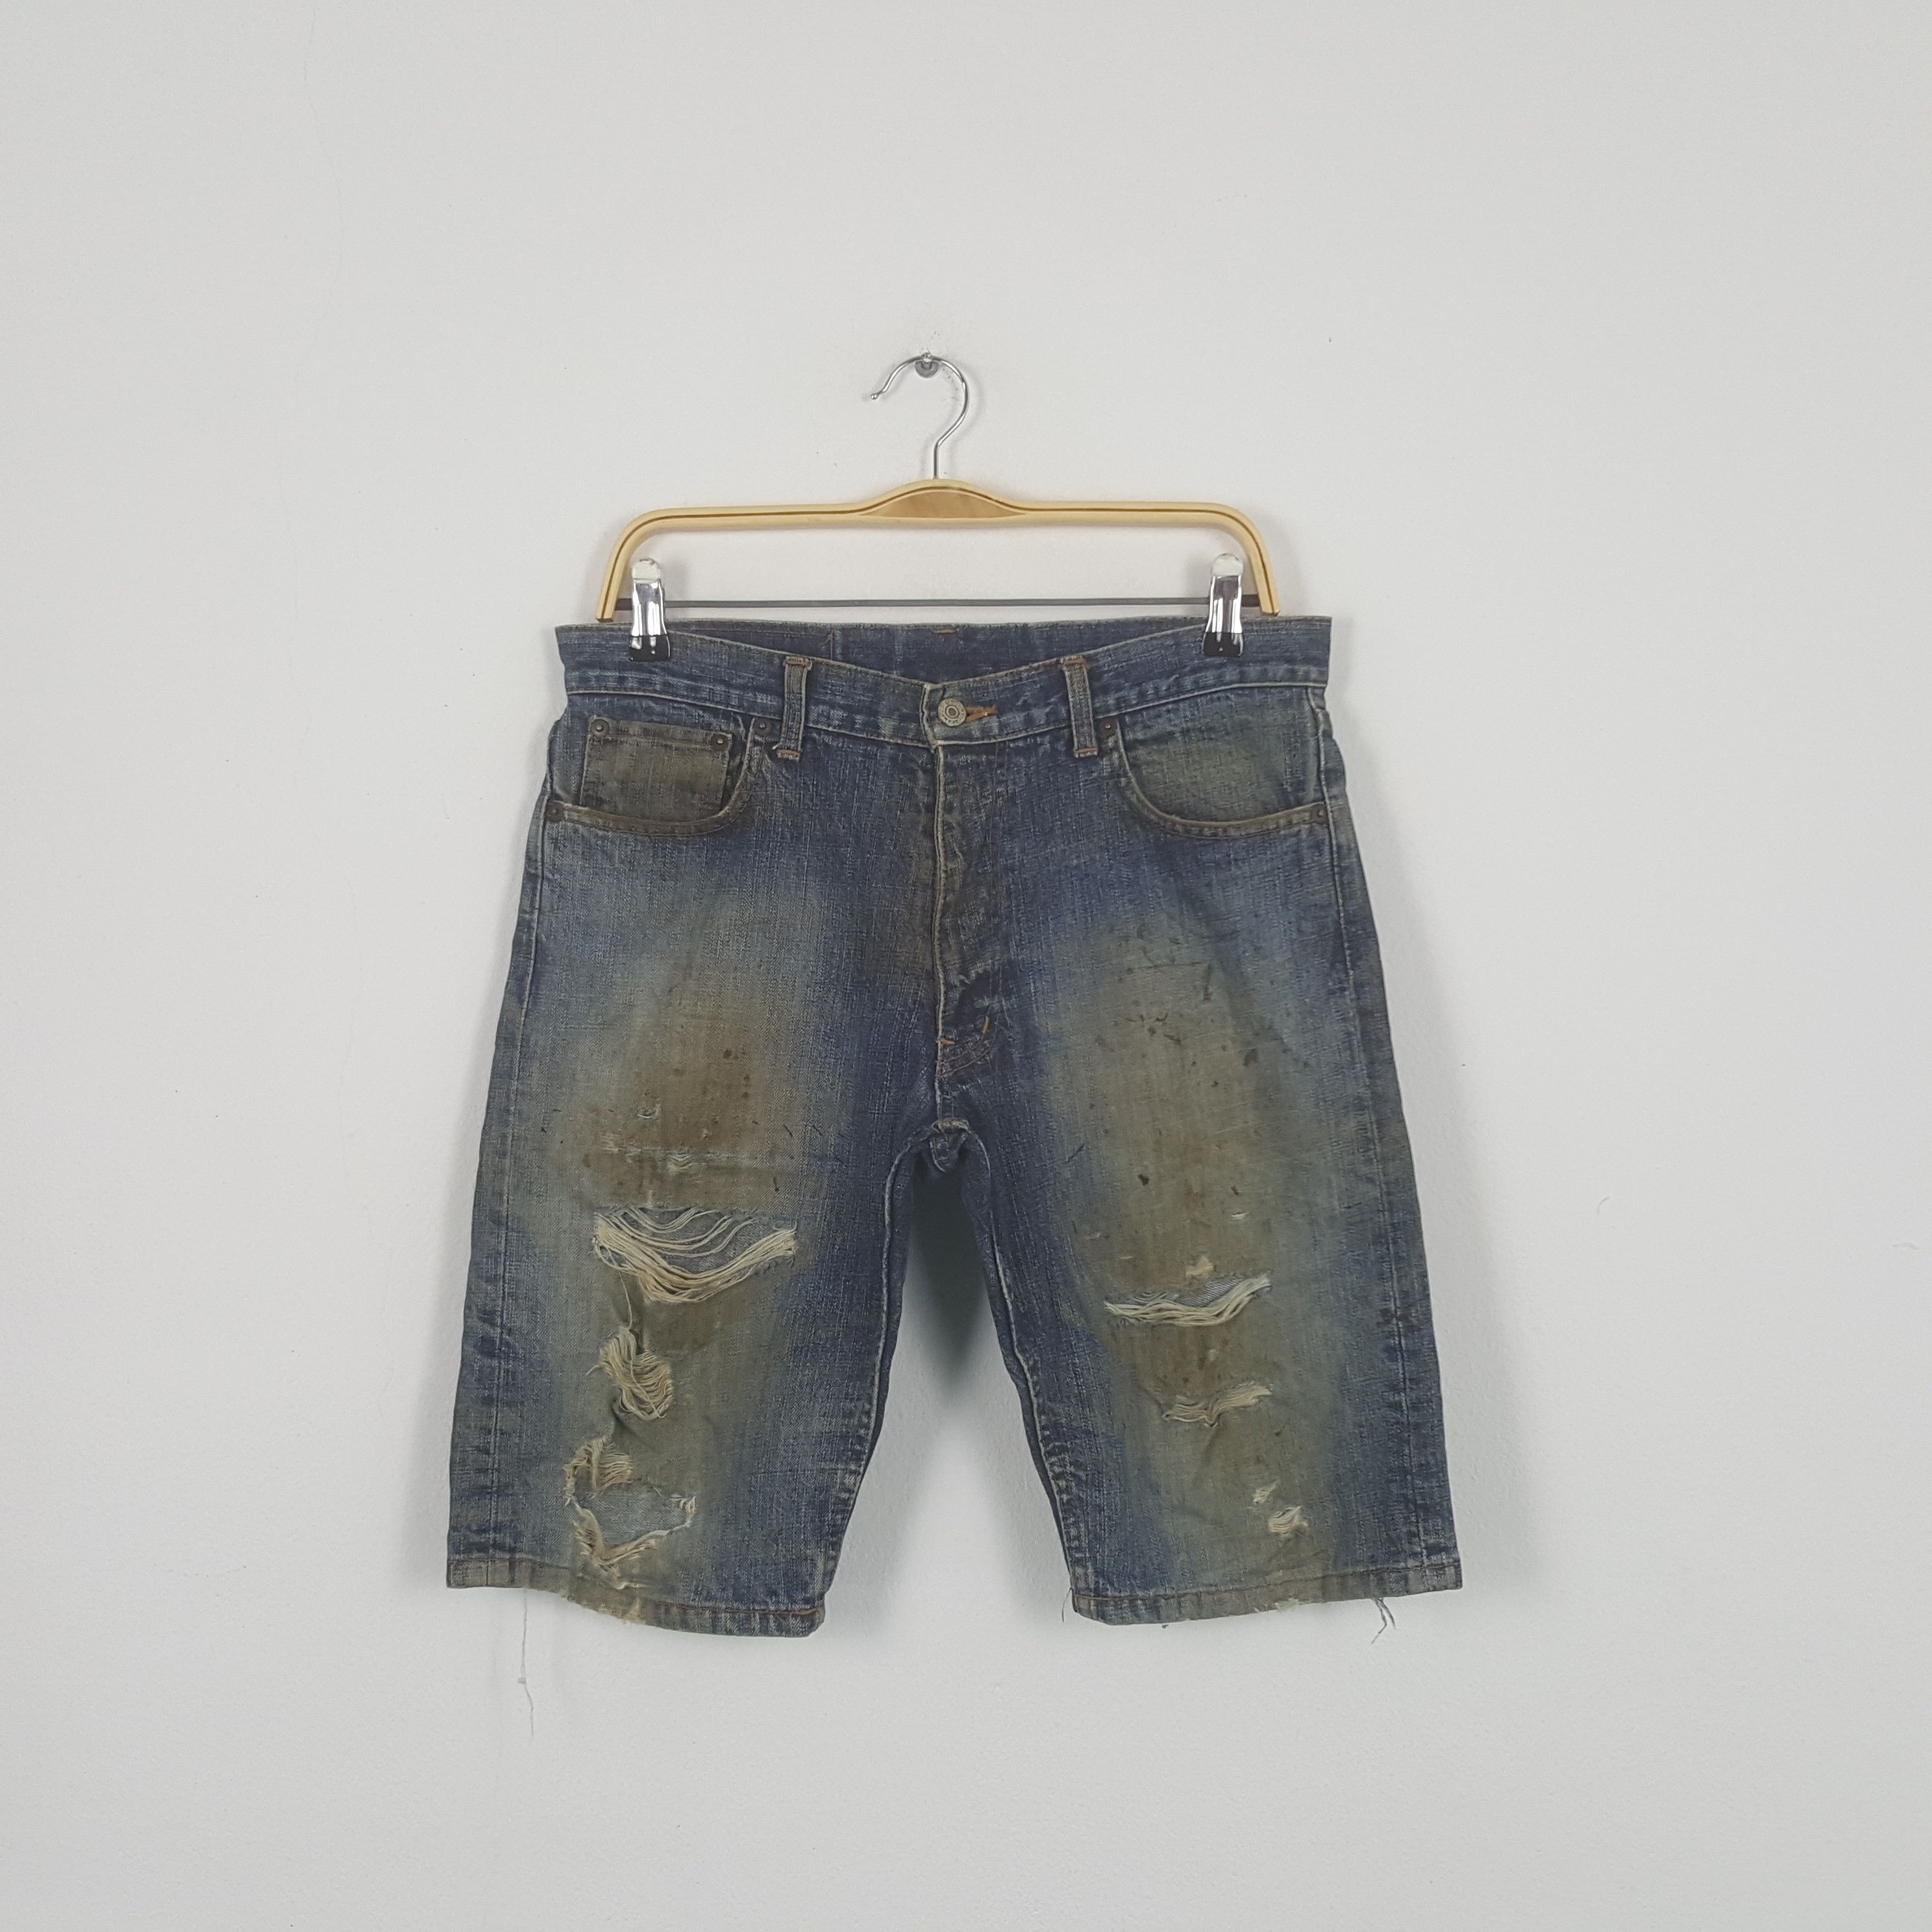 Vintage Vintage Beams Japanese Brand Distressed Shorts Denim Jeans Size US 32 / EU 48 - 3 Thumbnail